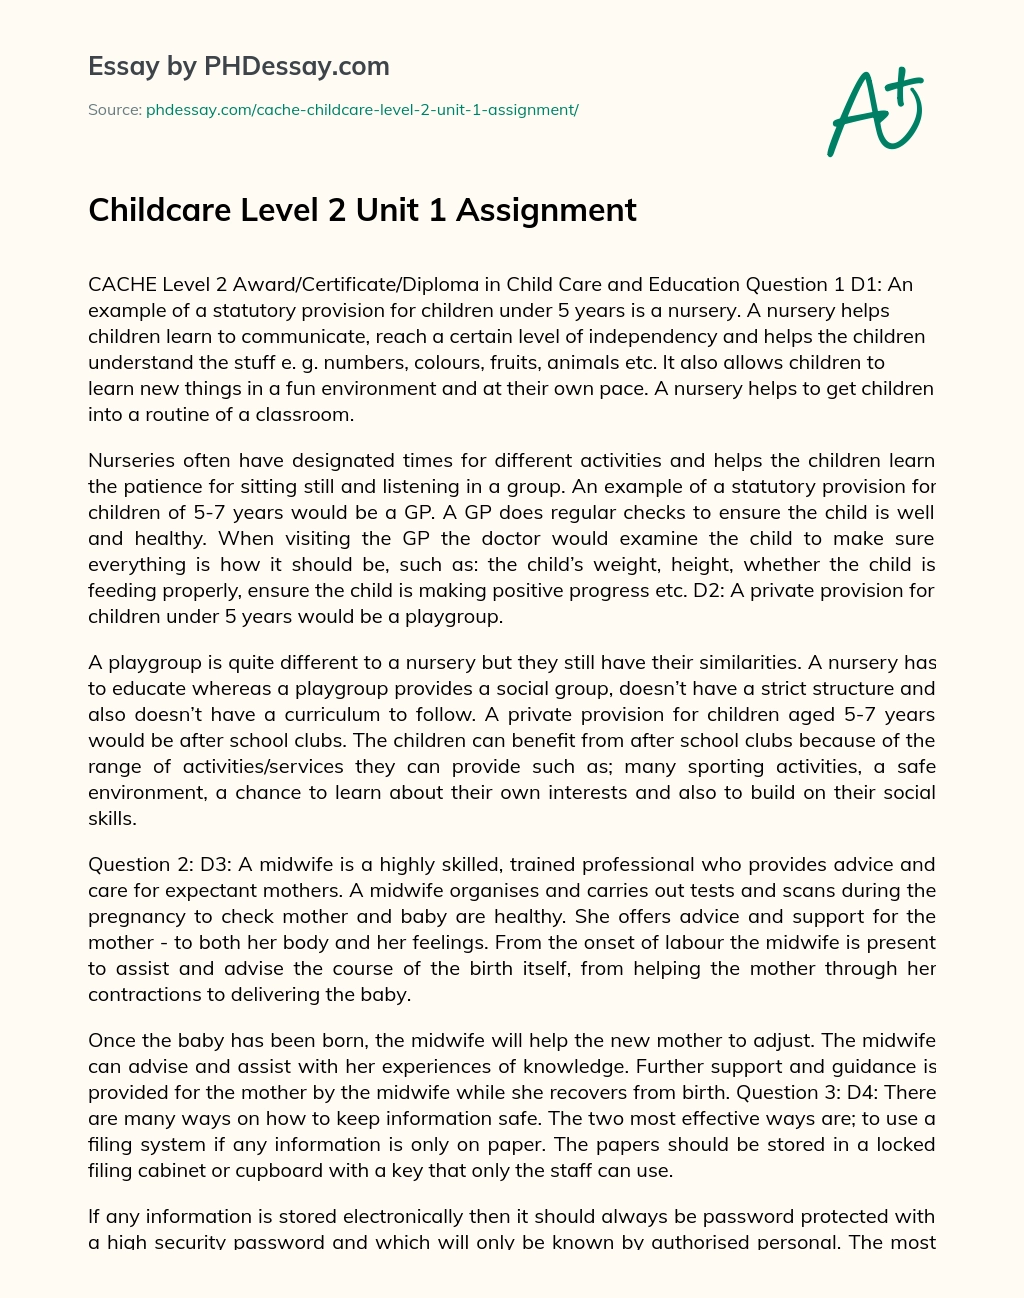 Childcare Level 2 Unit 1 Assignment essay